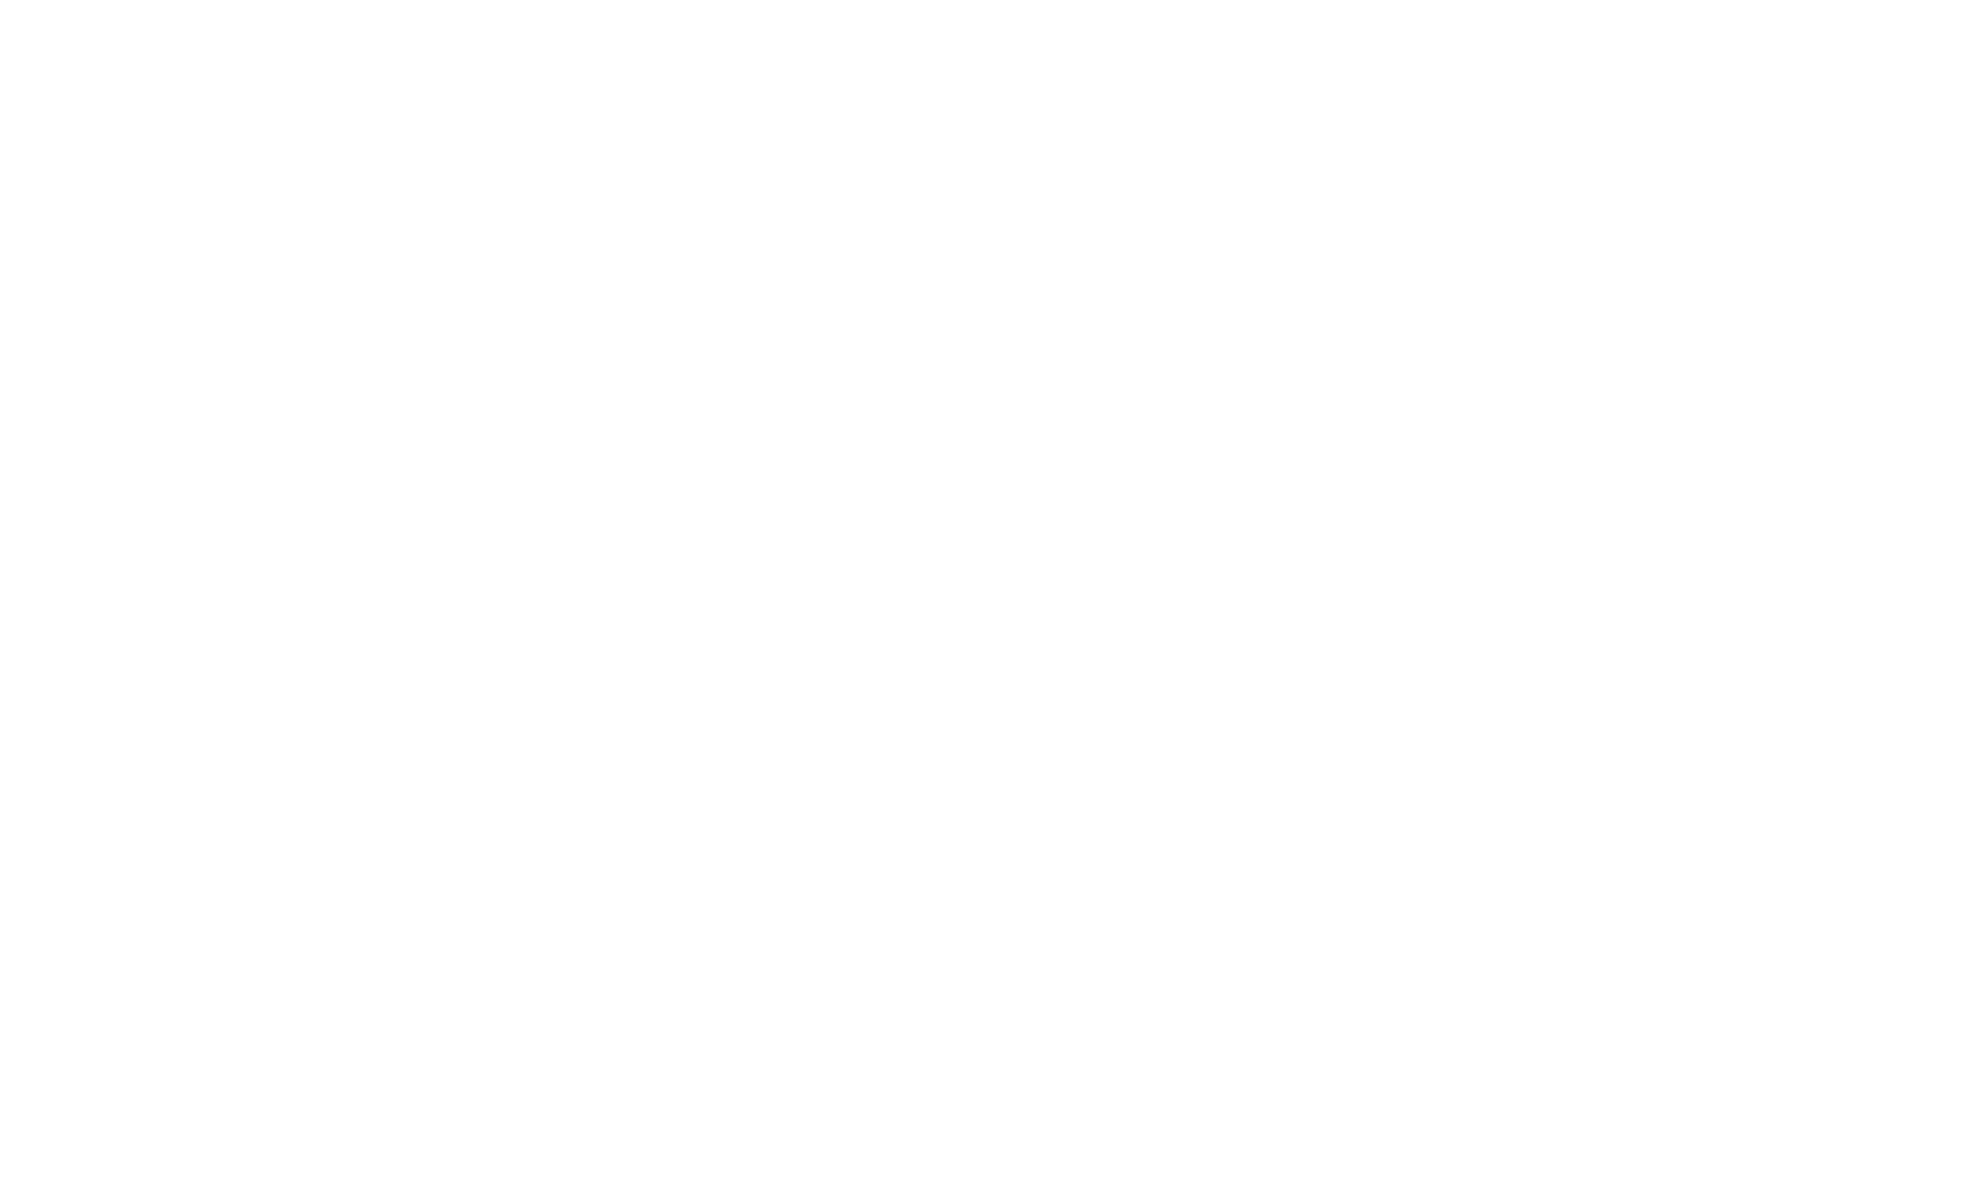 Greenarc Fuel Cards